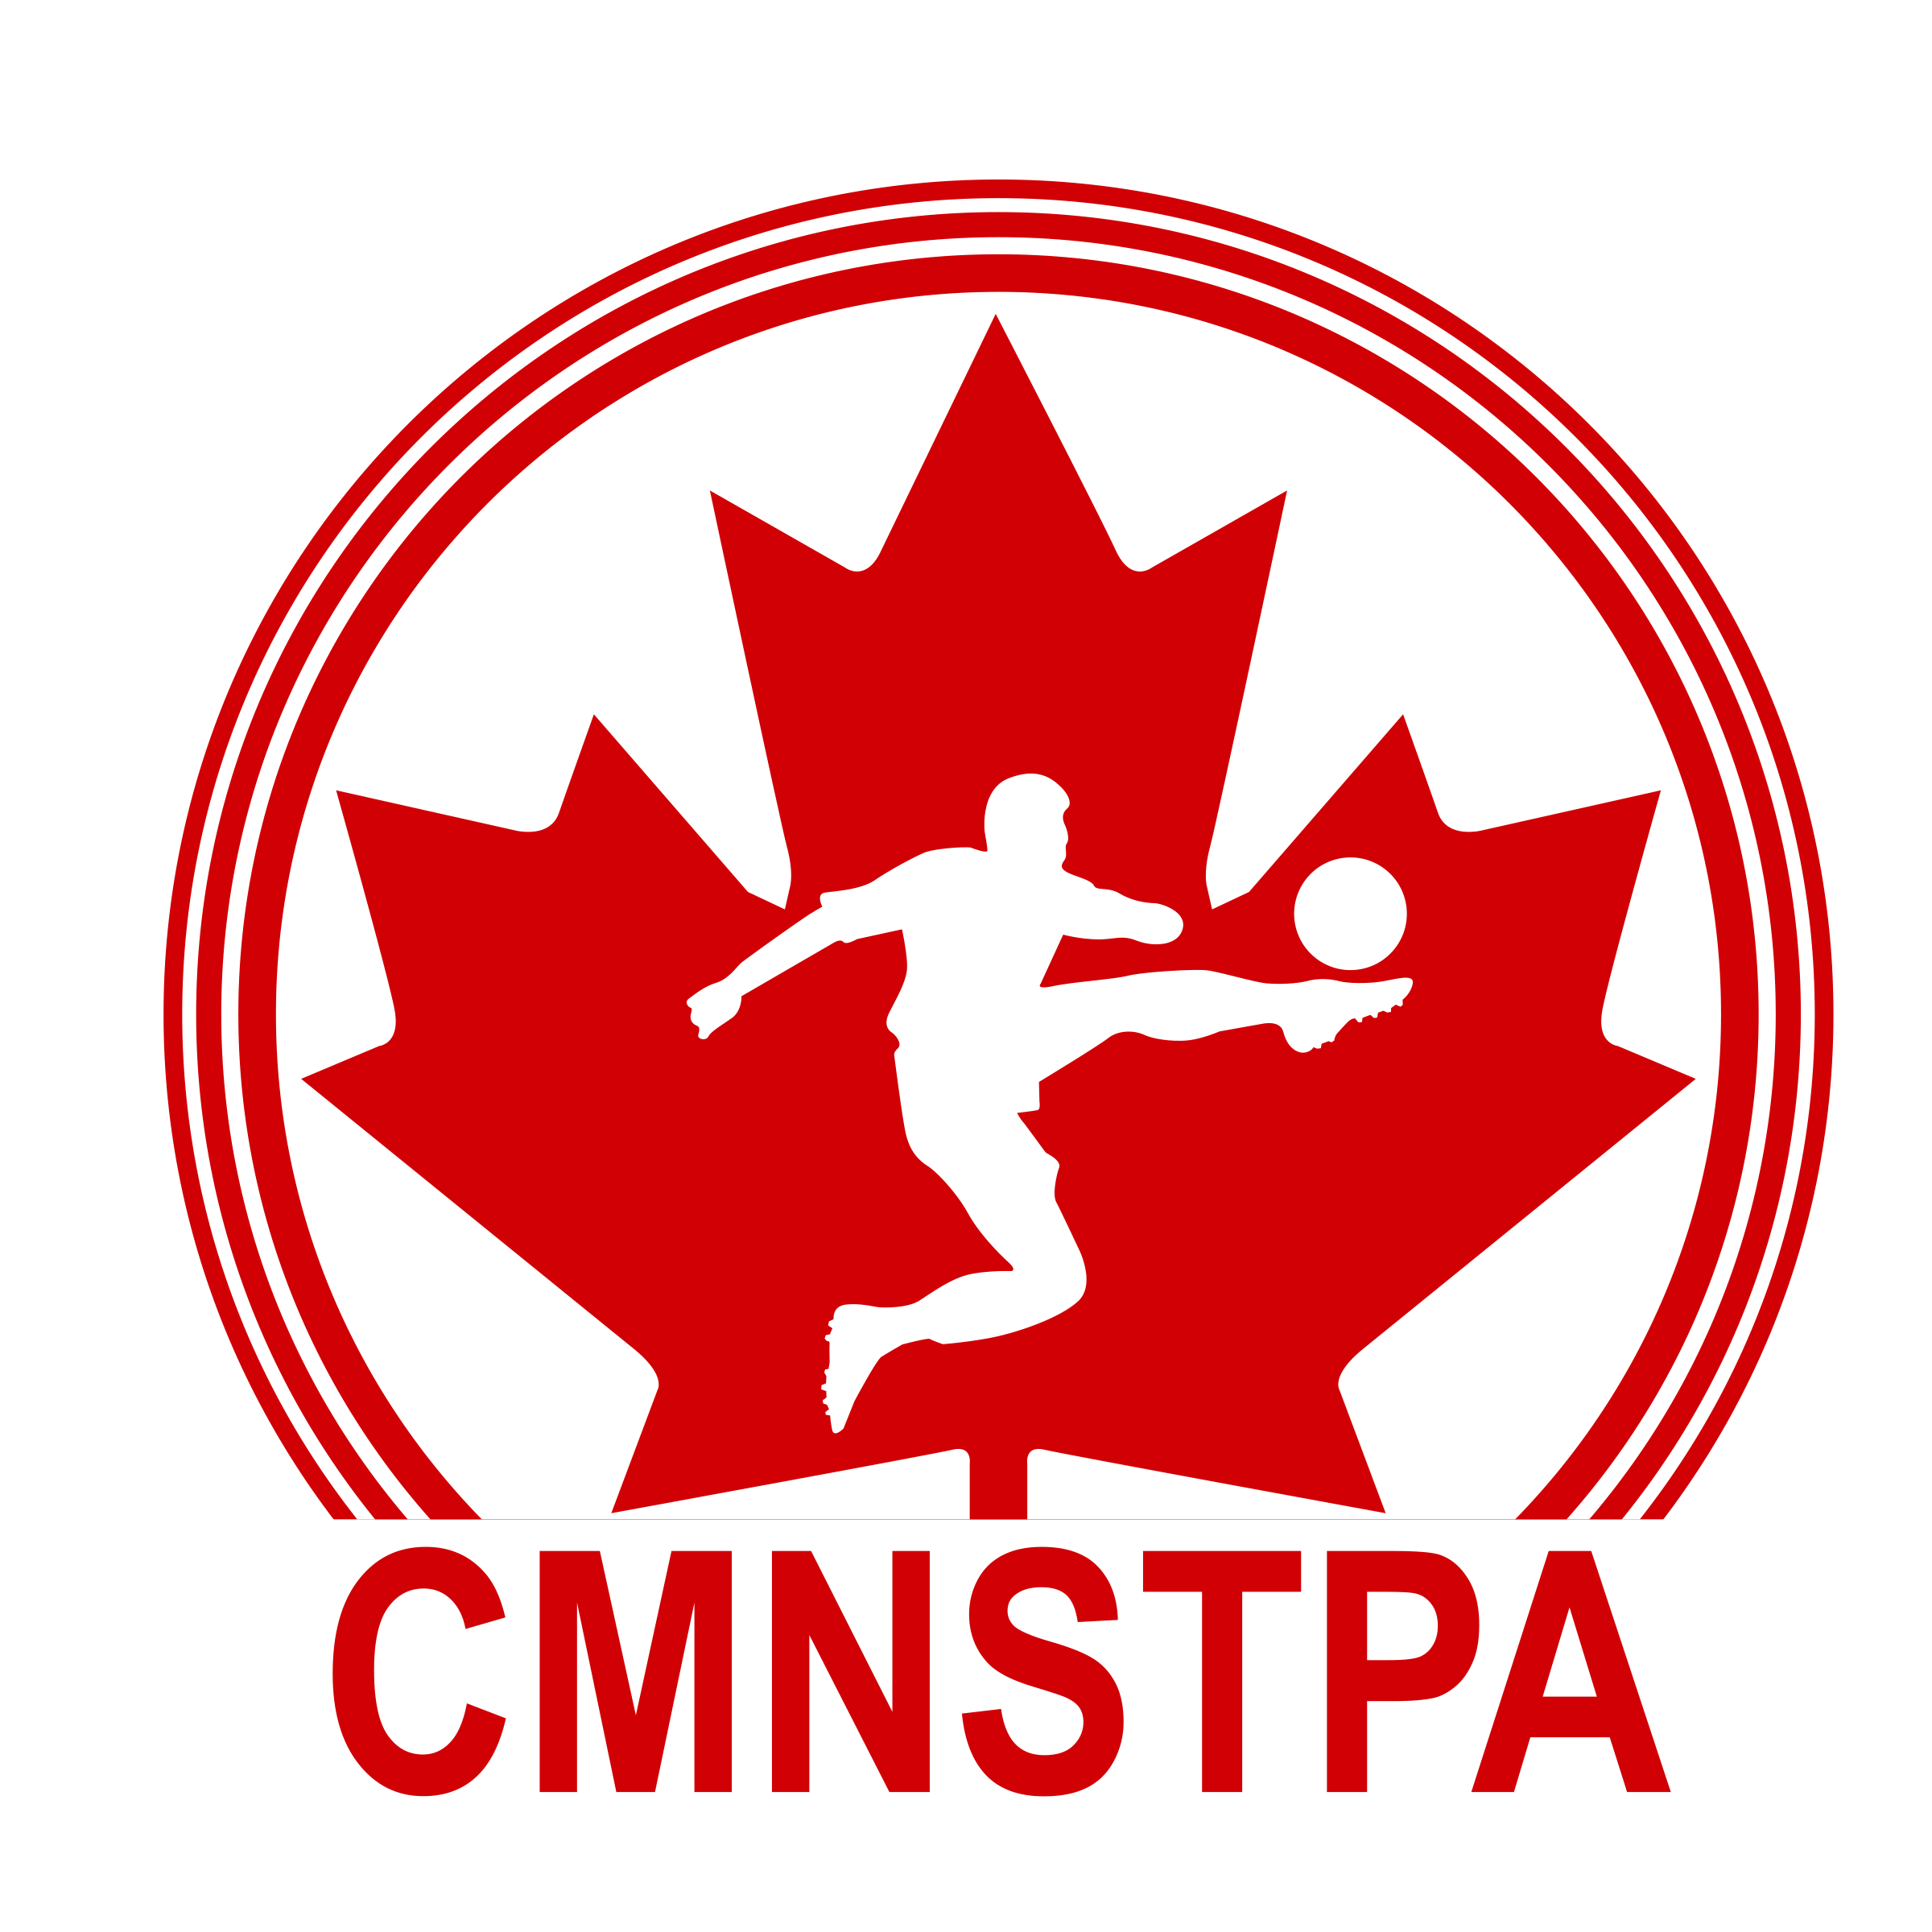 CMNSTPA logo